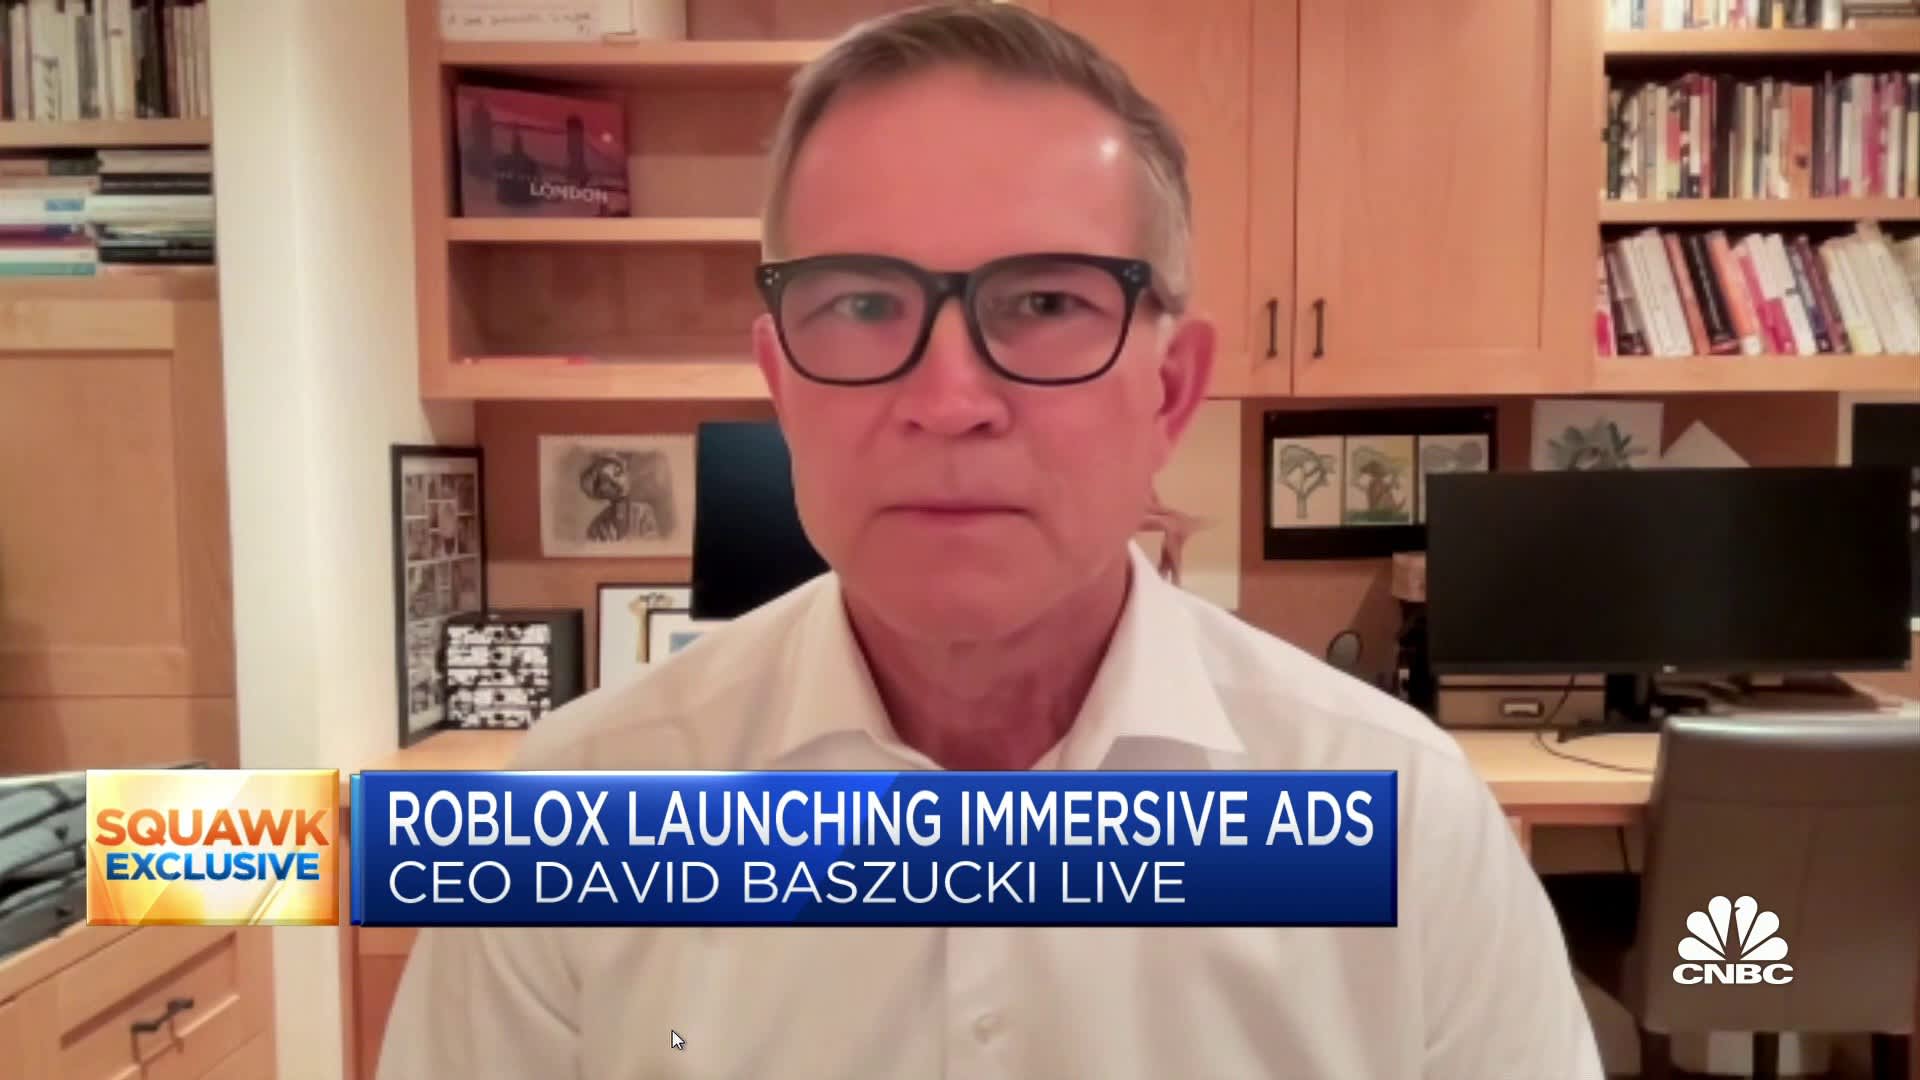 David Baszucki : Founder of Roblox, the Biggest Video Game Building  Platform - Your Tech Story